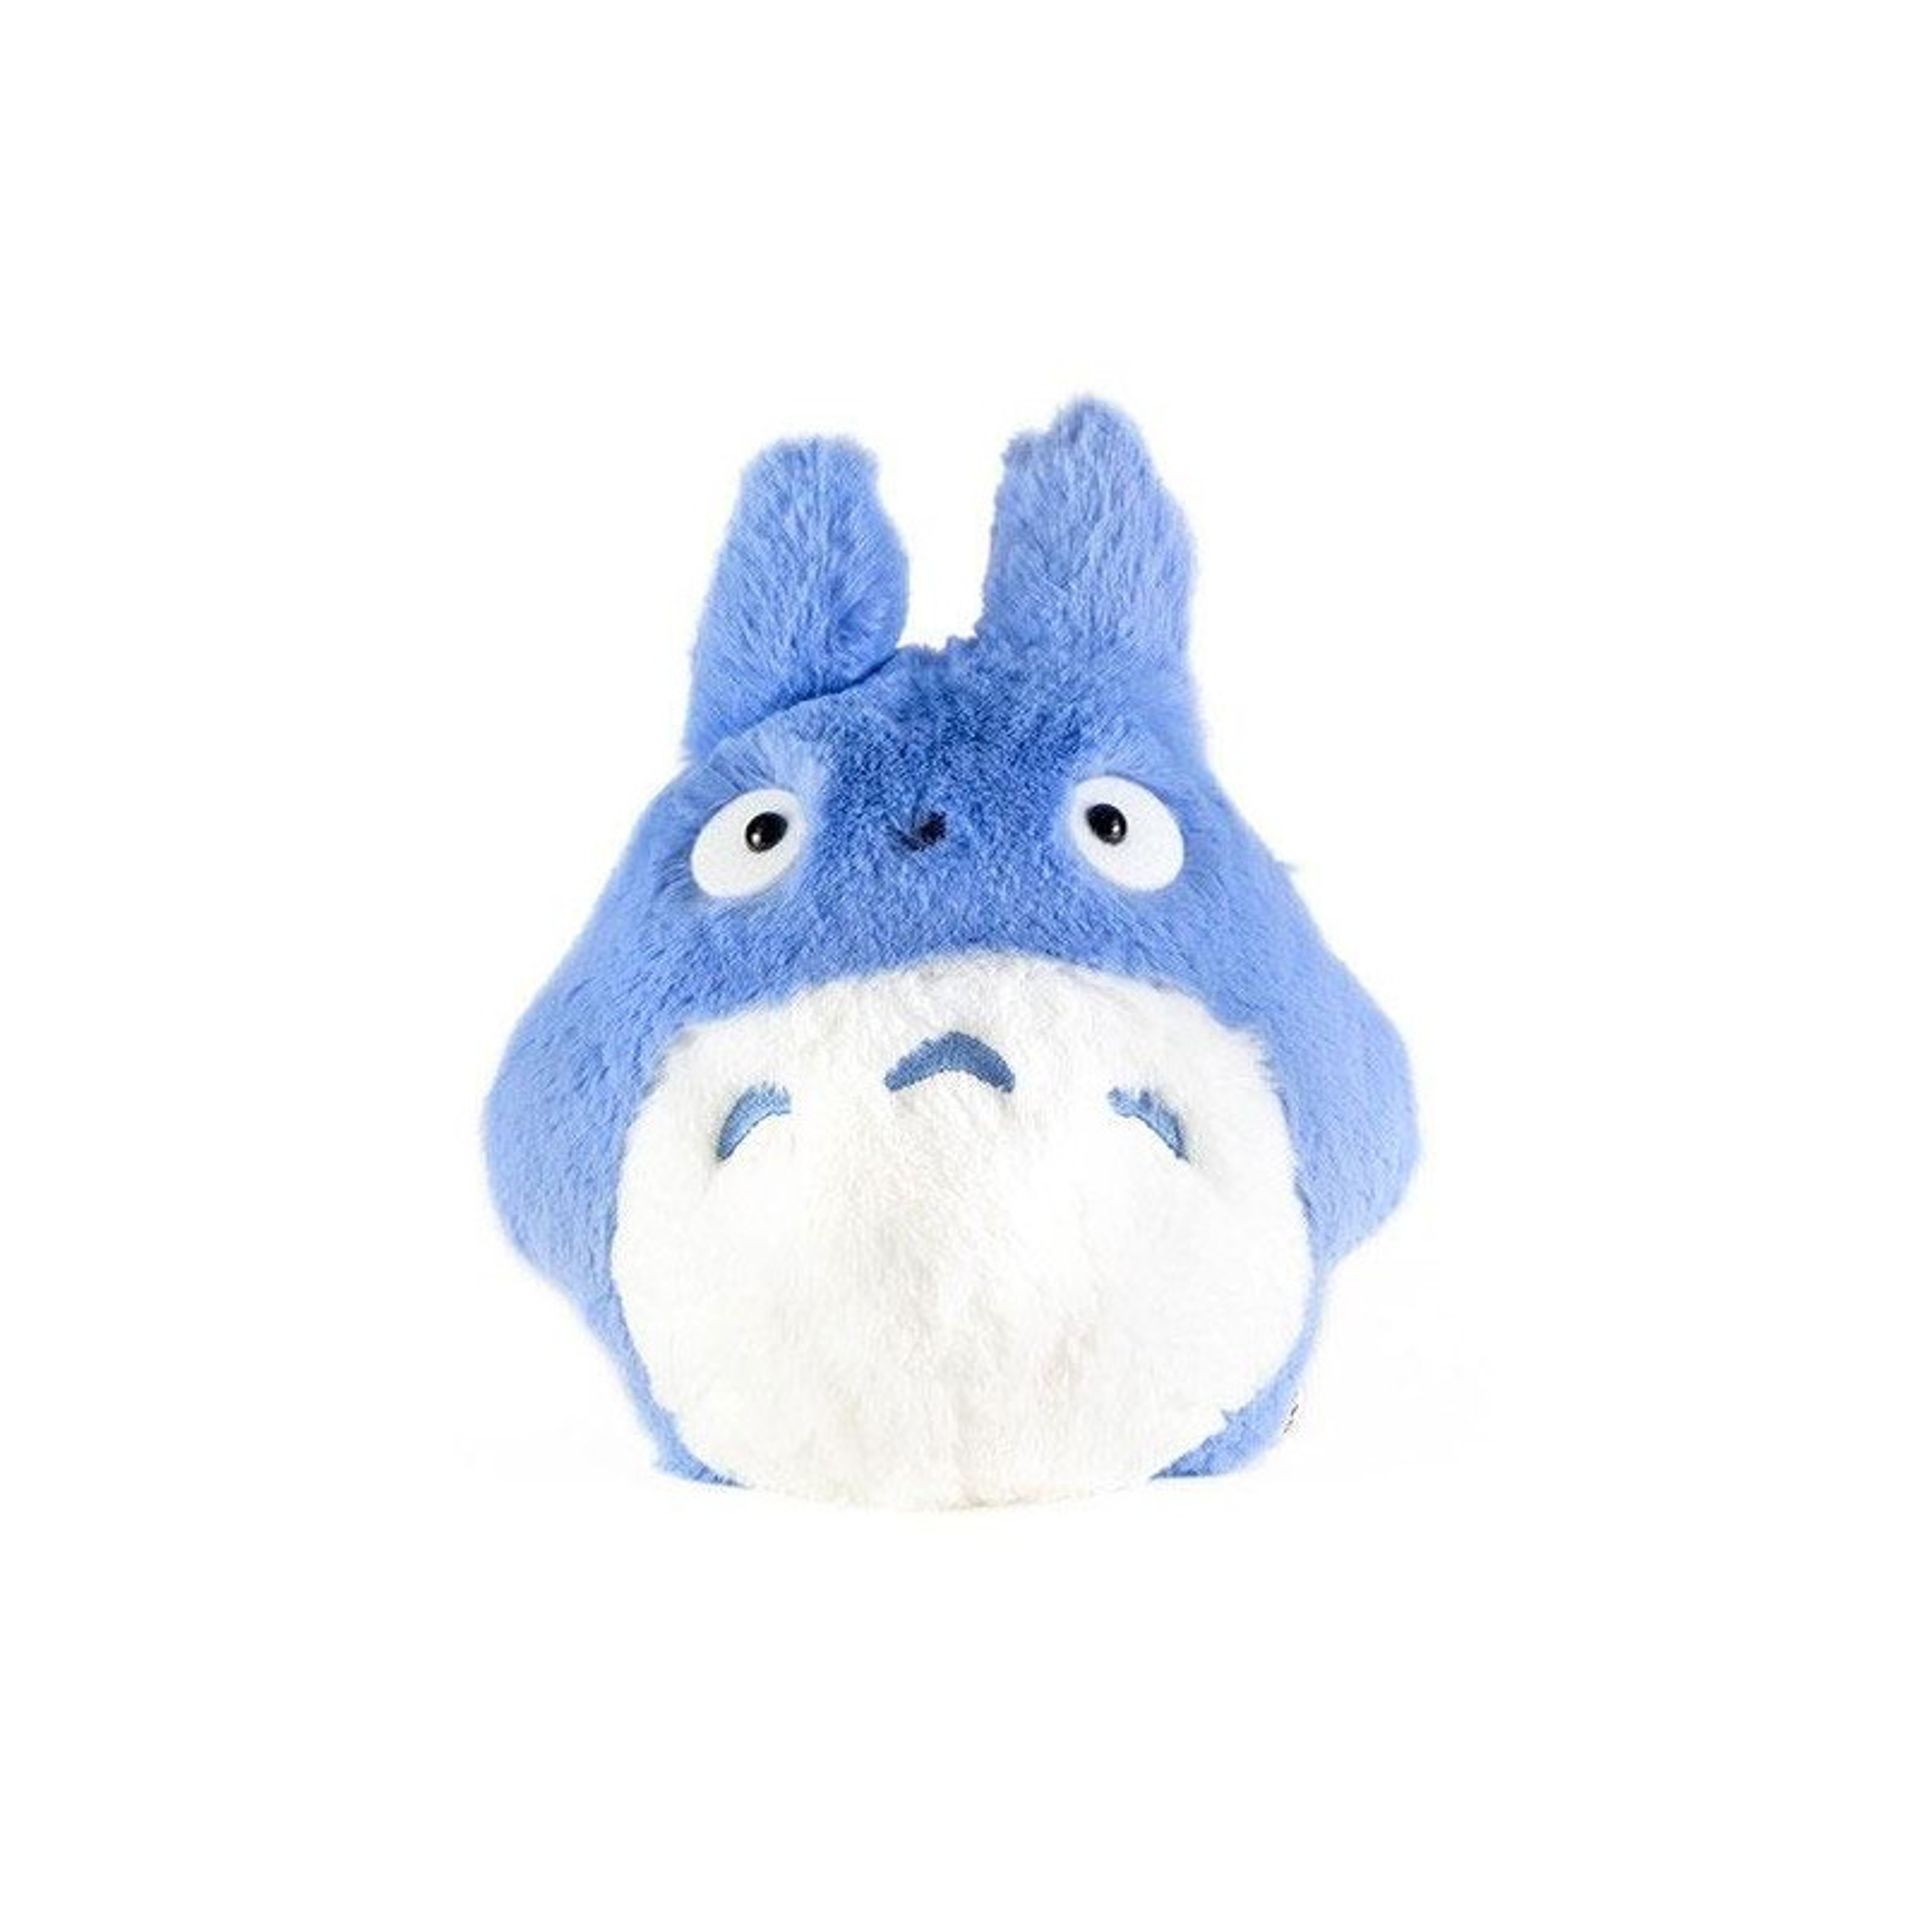 Acheter Ghibli - Mon Voisin Totoro - Peluche Nakayoshi Totoro Bleu -  Peluches prix promo neuf et occasion pas cher